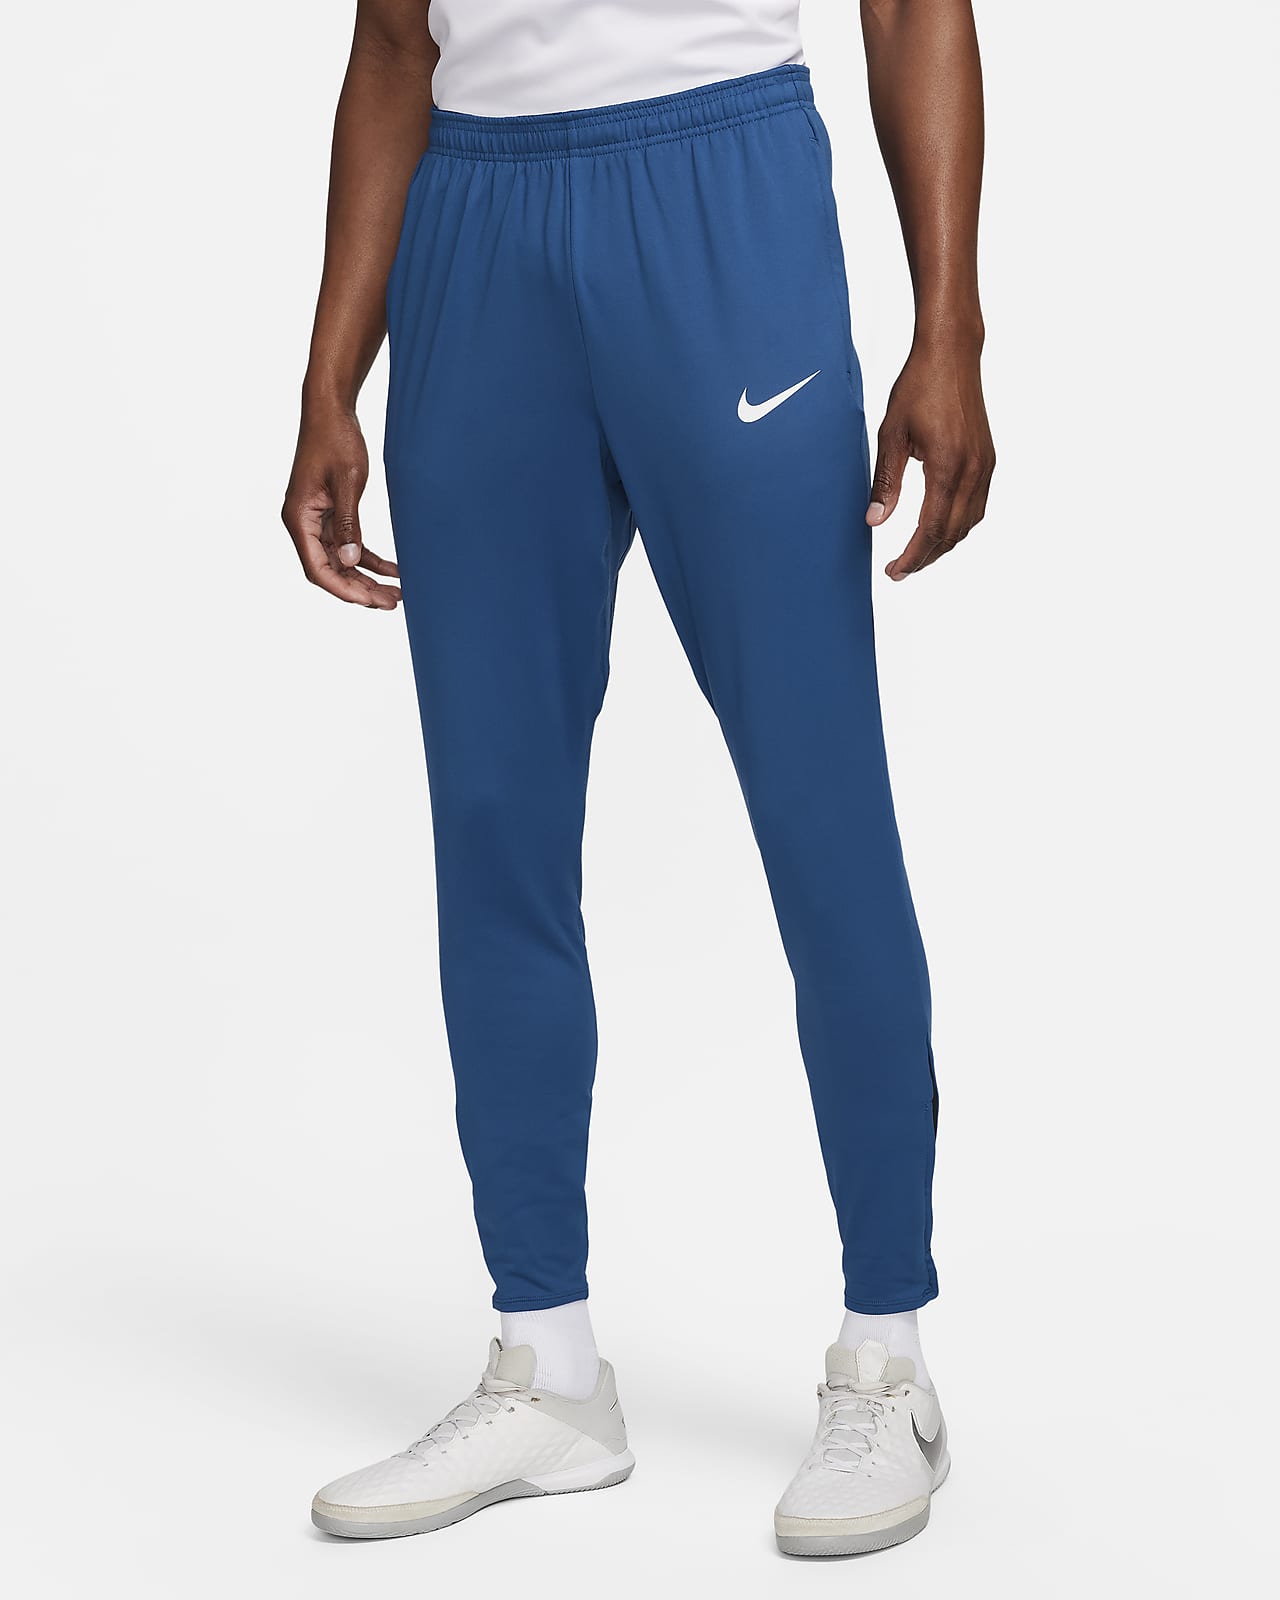 Nike Men's Academy Soccer Pants